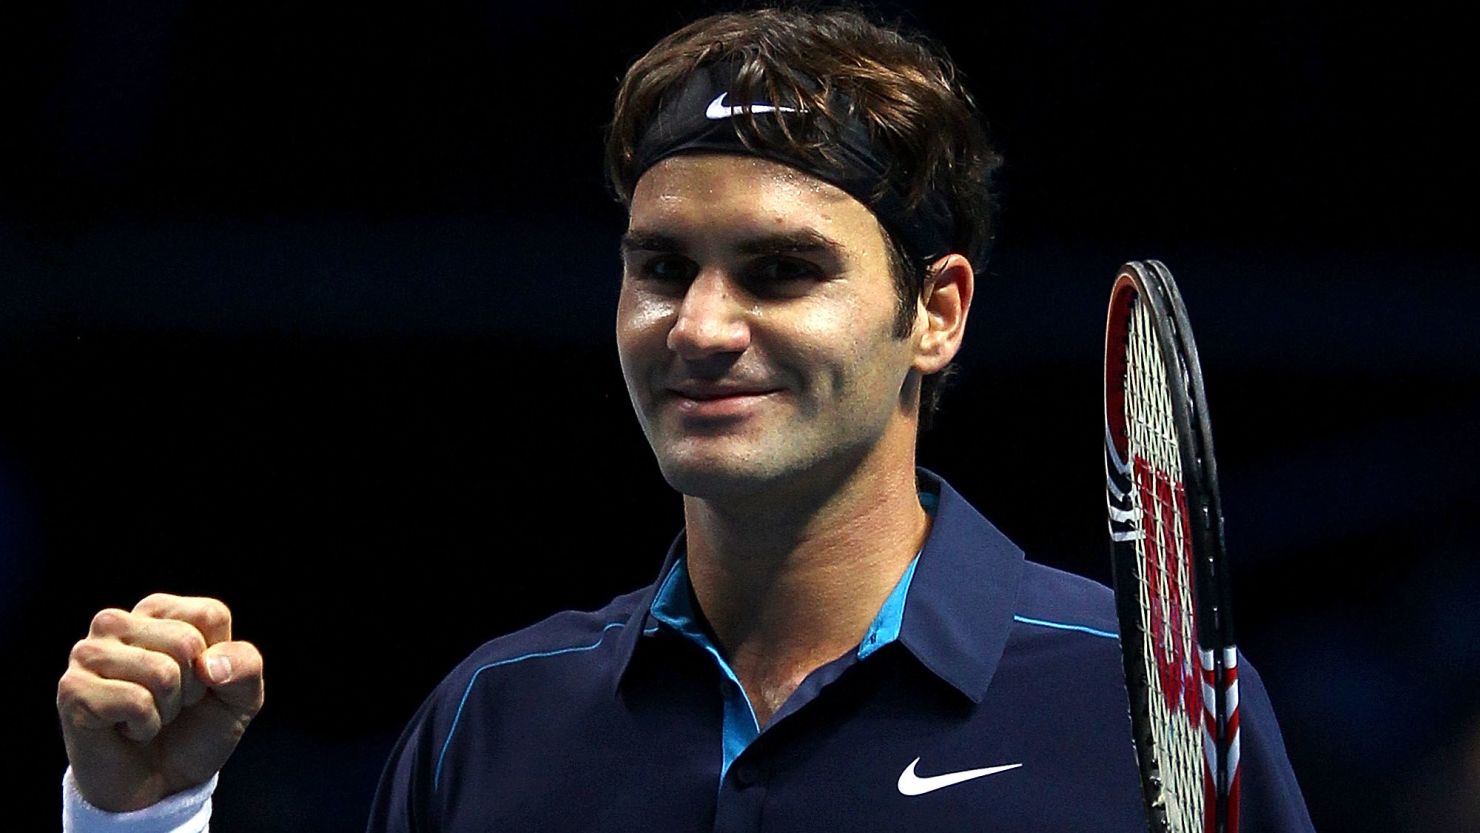 Swiss tennis star Roger Federer celebrates reaching the ATP World Tour Finals title match.